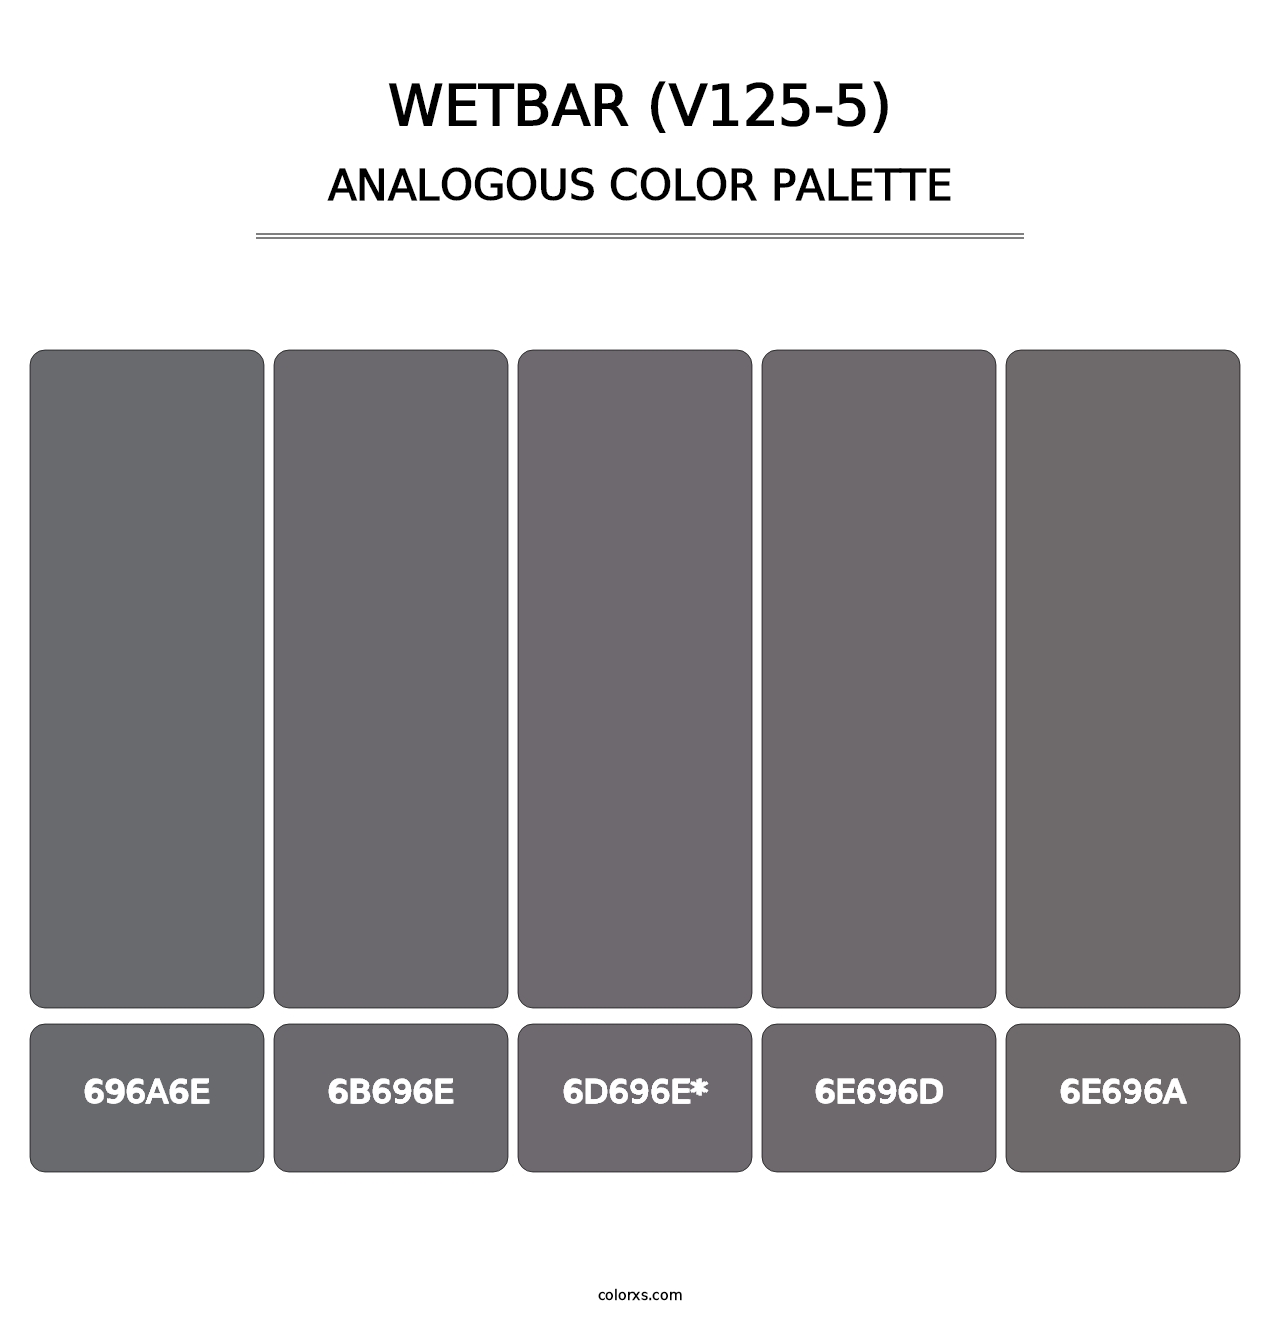 Wetbar (V125-5) - Analogous Color Palette